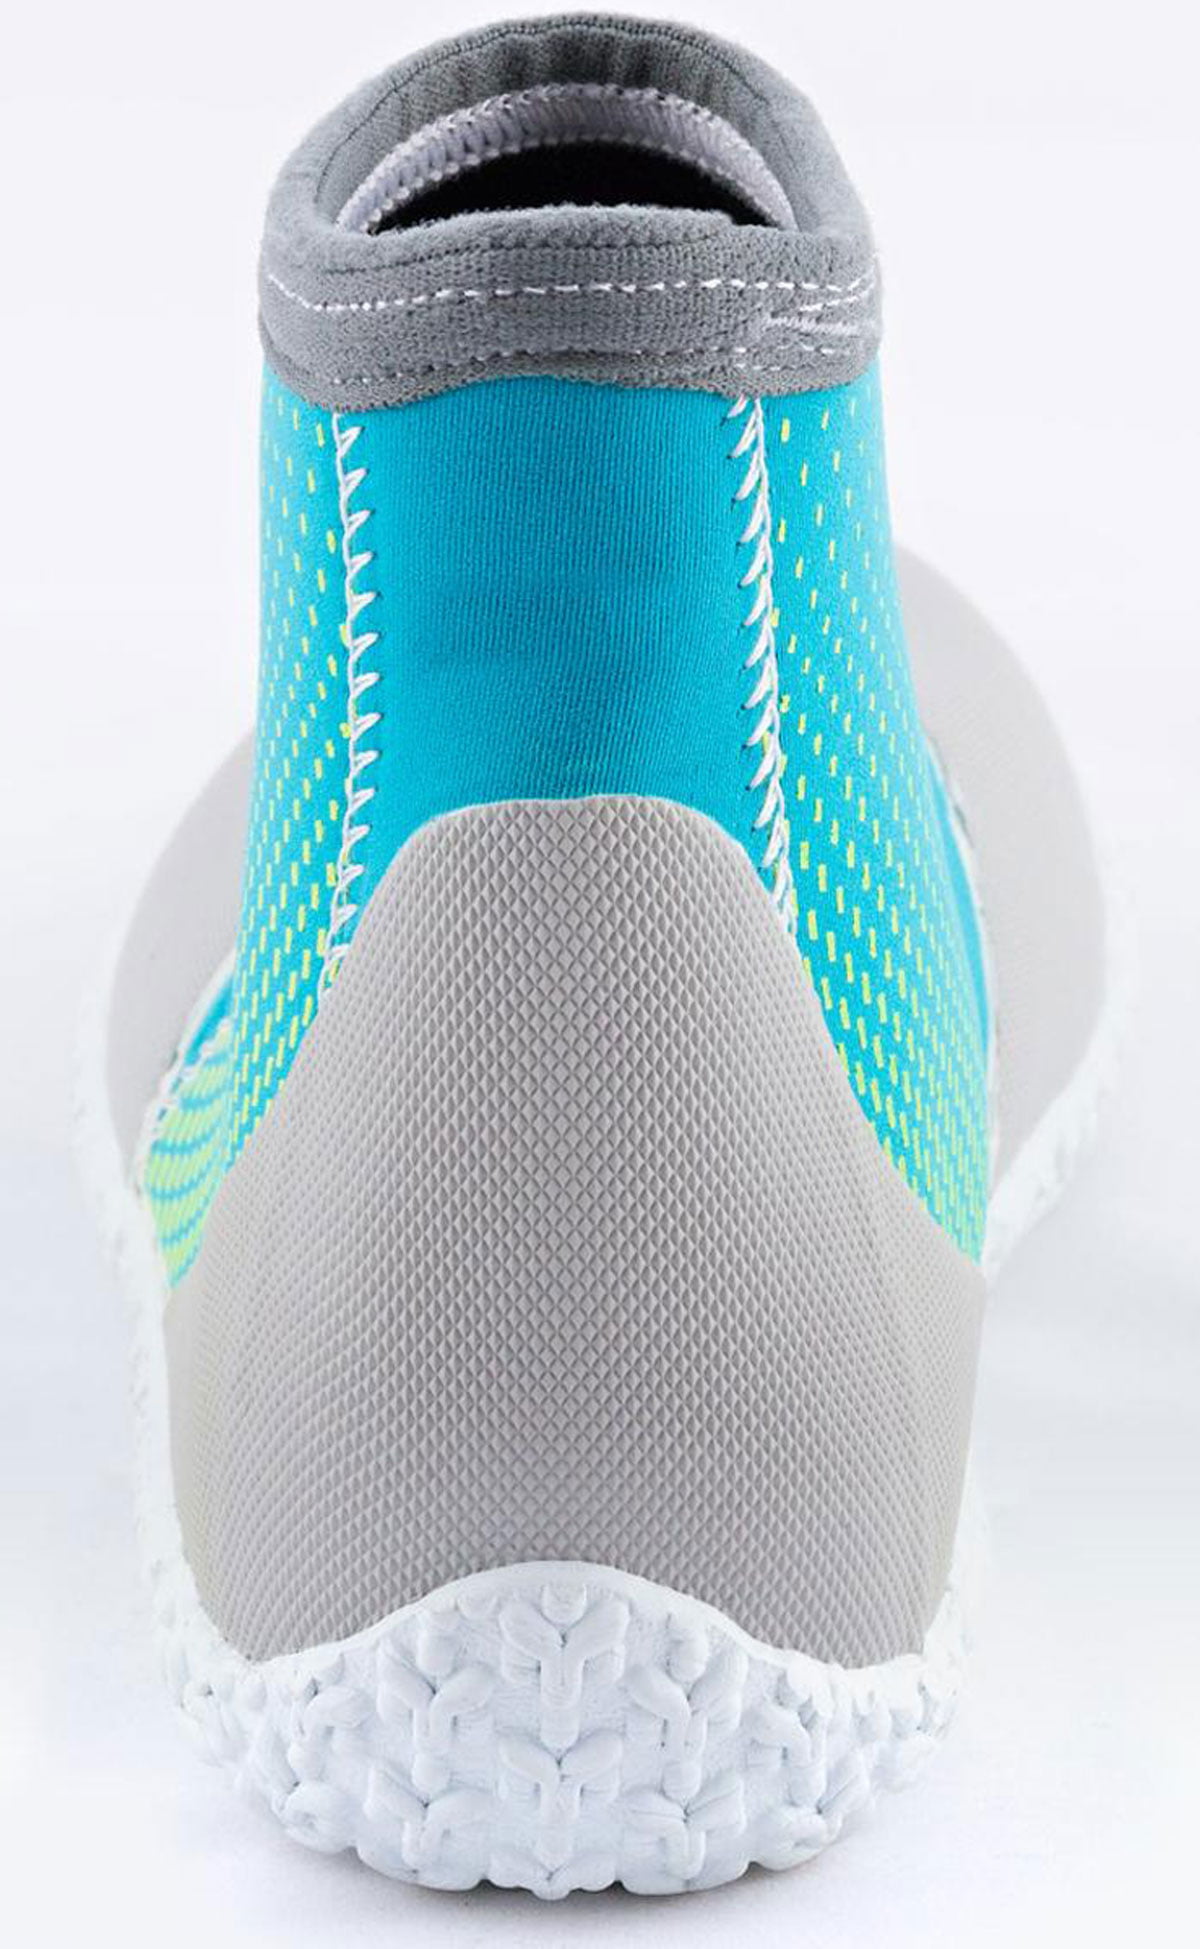 Bright Blue 3mm NeoSport Women's Neoprene Low-Top Boots 